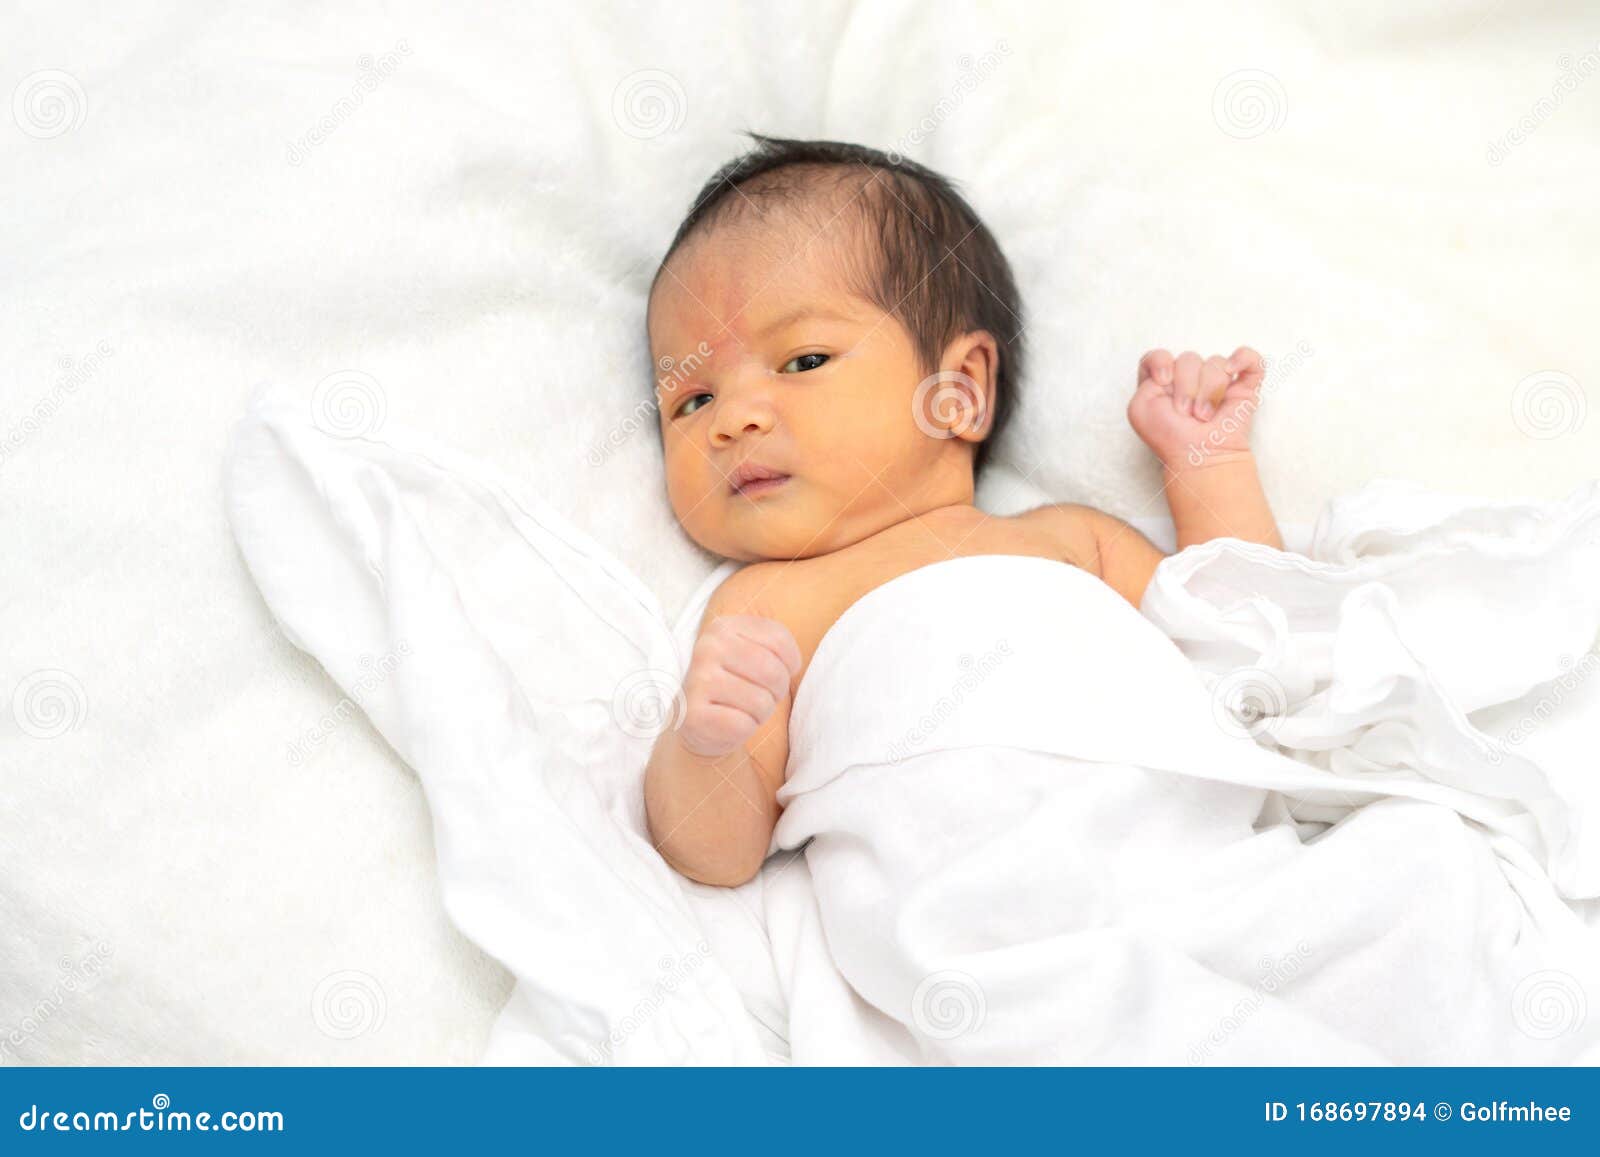 Cute Newborn Baby Girl in White Blanket OnÂ nurseryÂ bed.Â ...